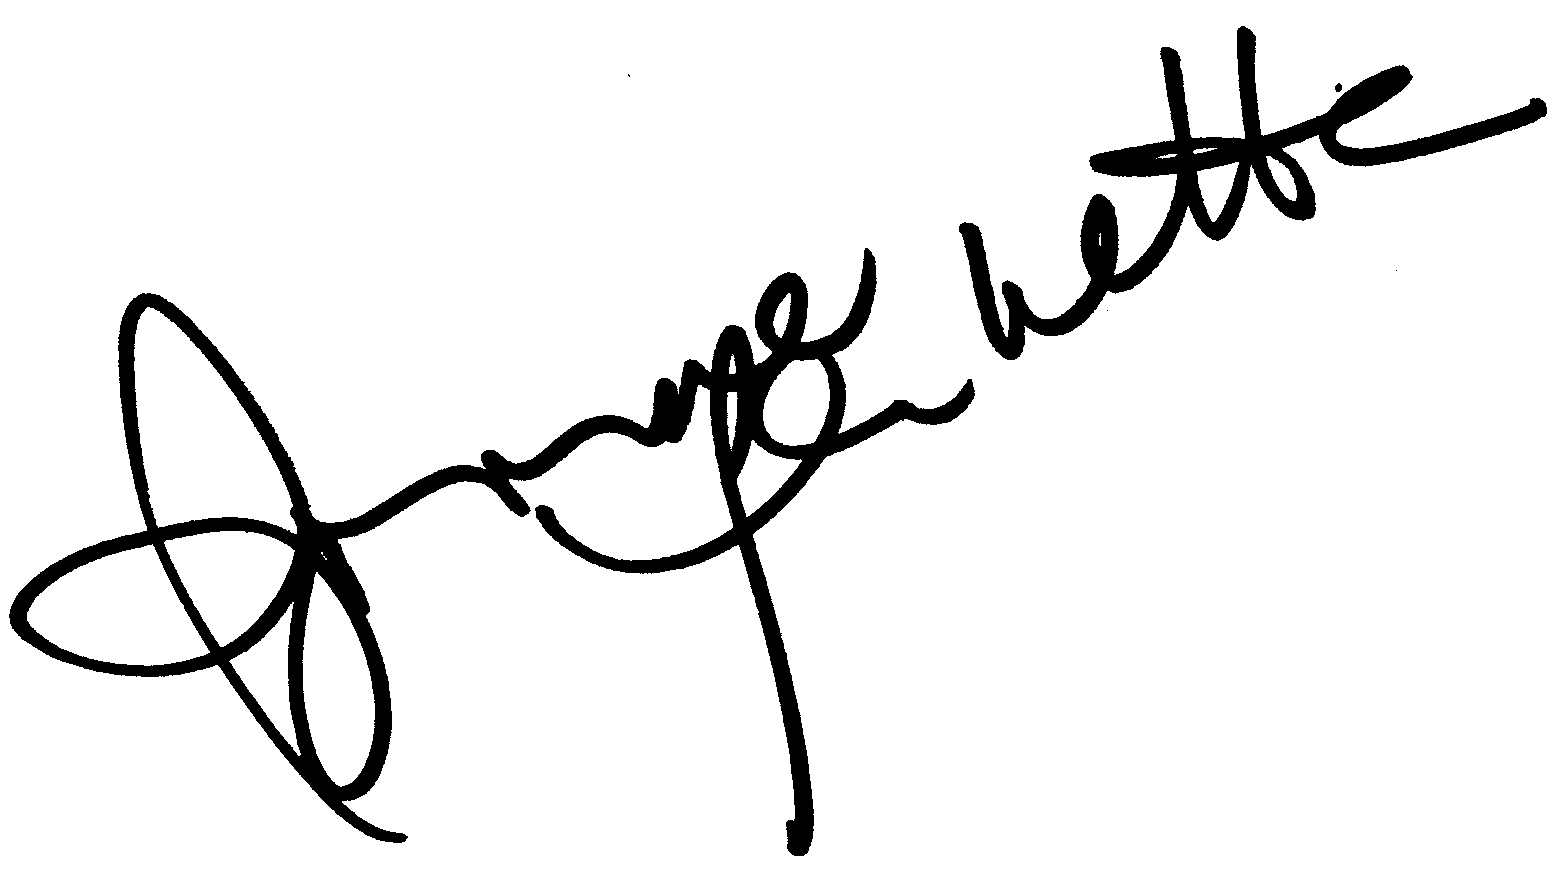 Suzanne Pleshette autograph facsimile